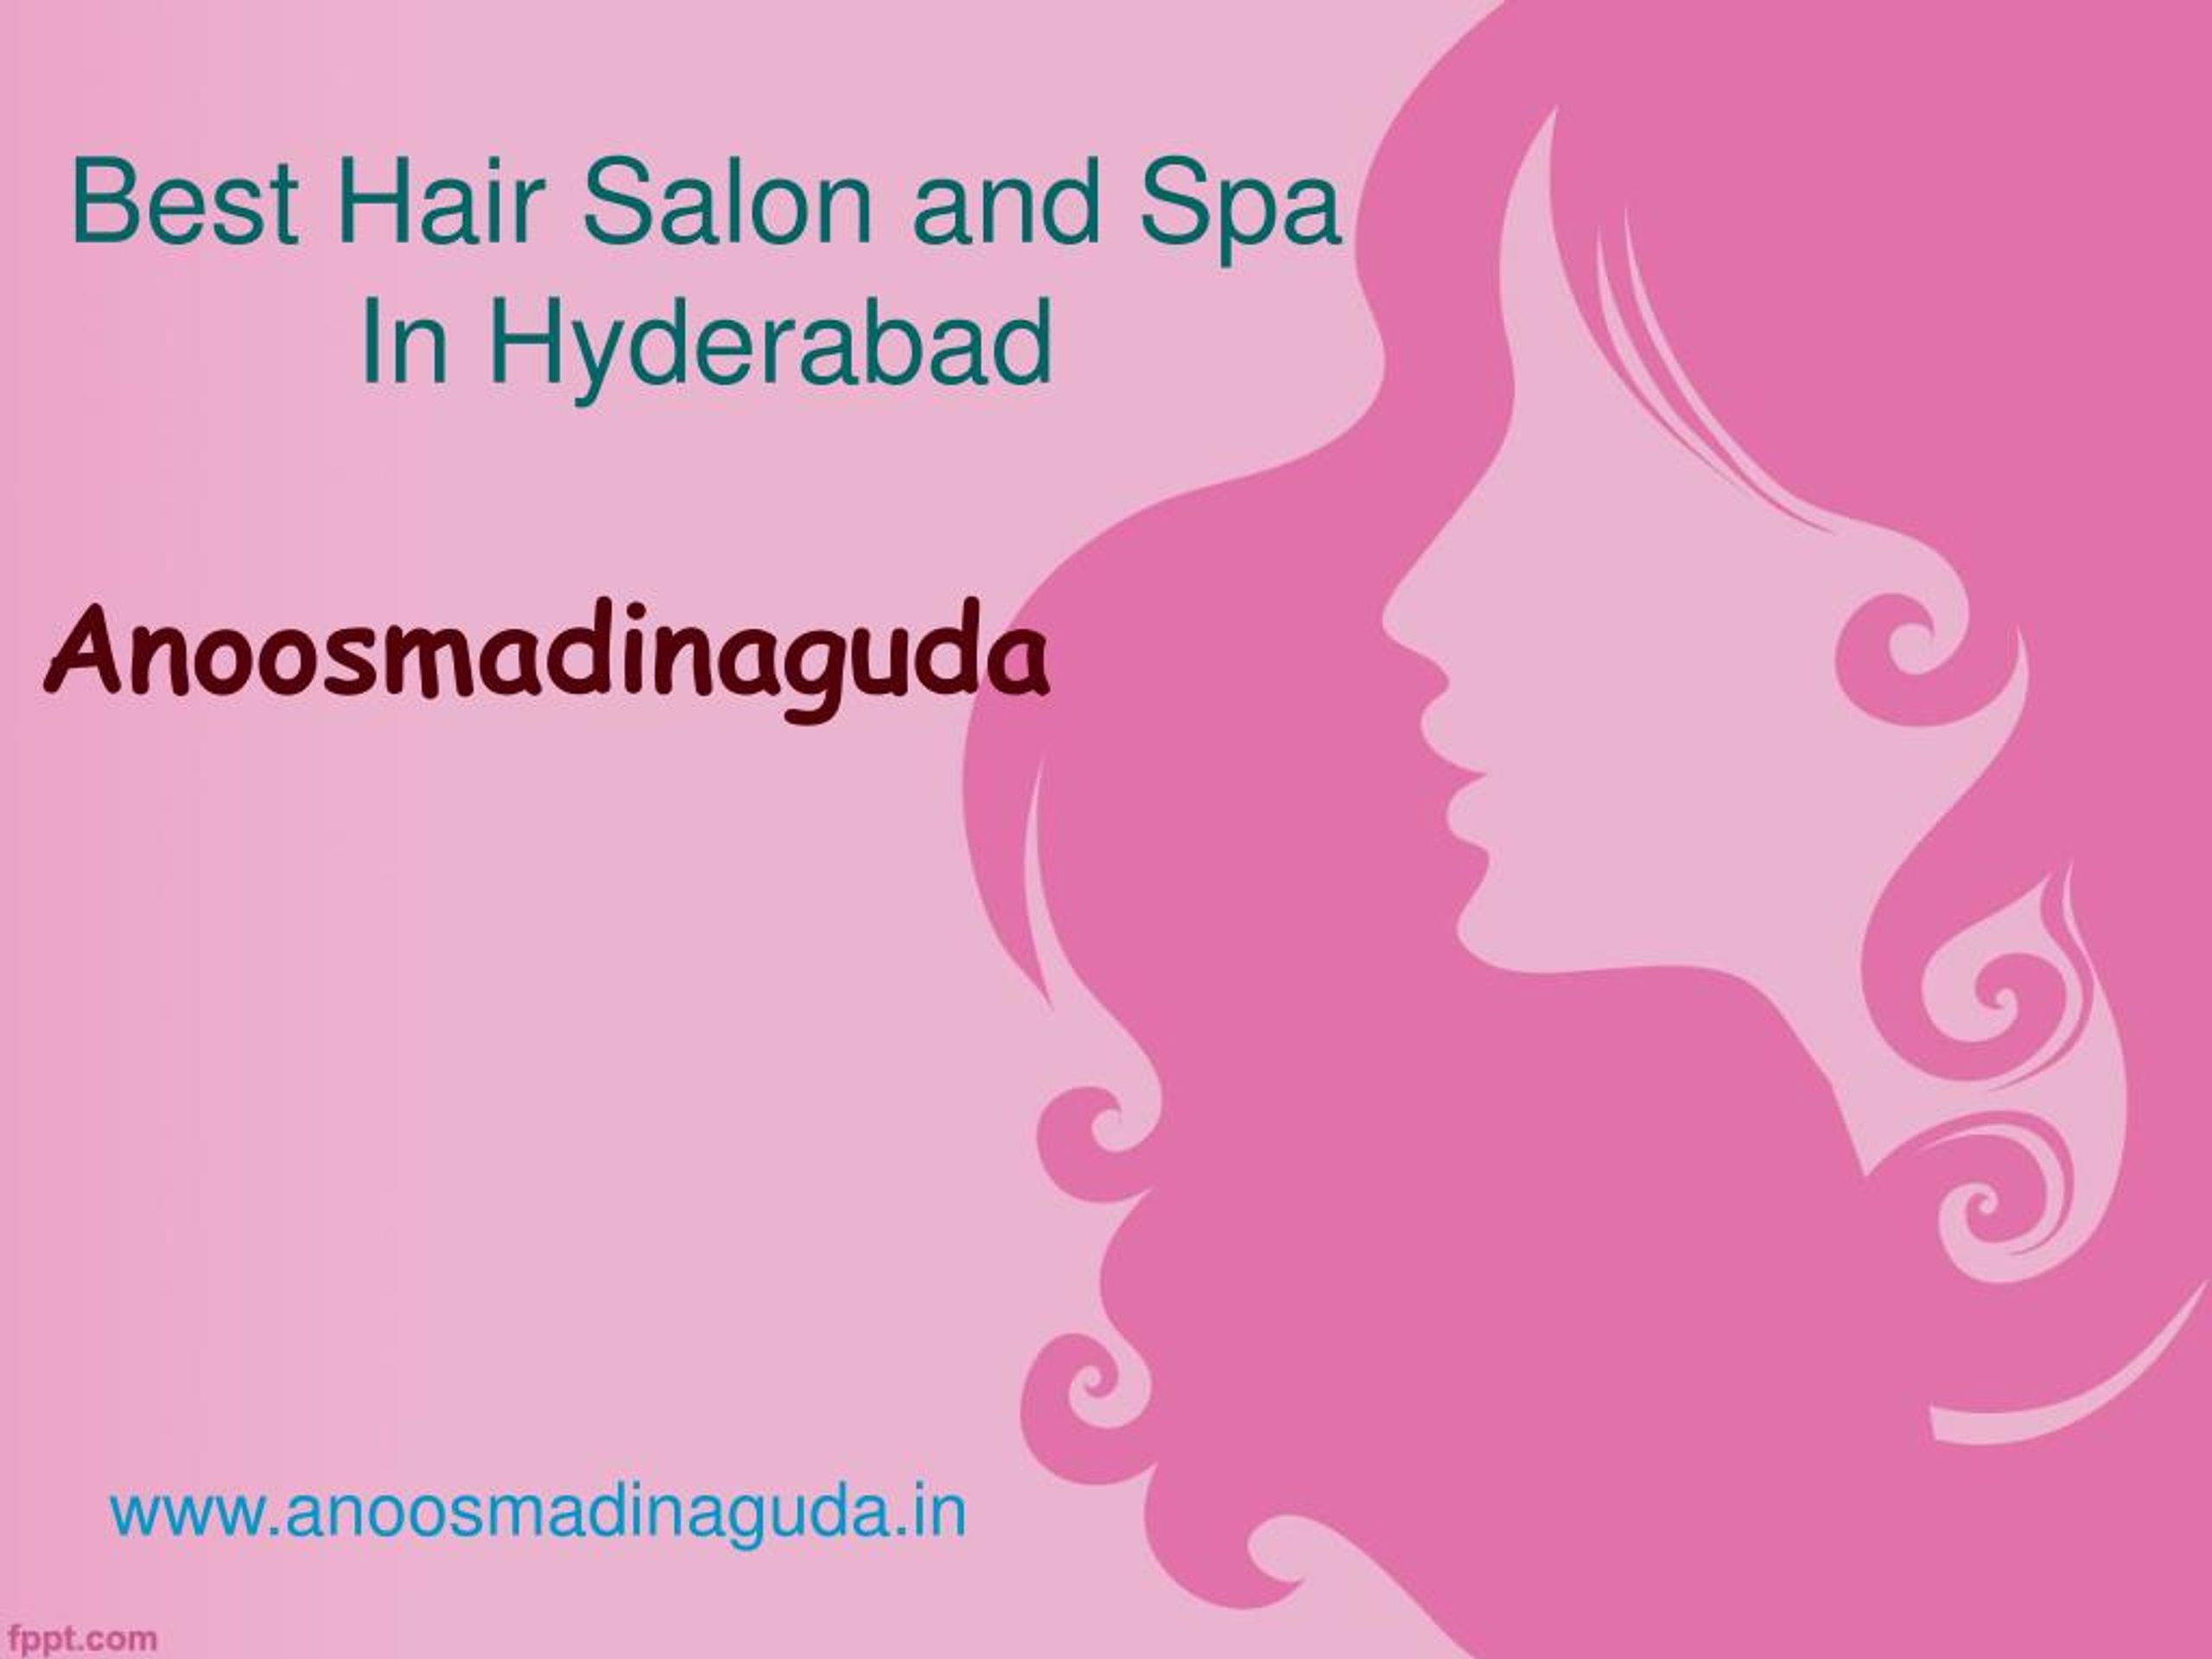 PPT - Best Hair Salon and Spa In Hyderabad, Beauty Parlours in Madinaguda  Hyderabad – Anoos madinaguda PowerPoint Presentation - ID:7488108